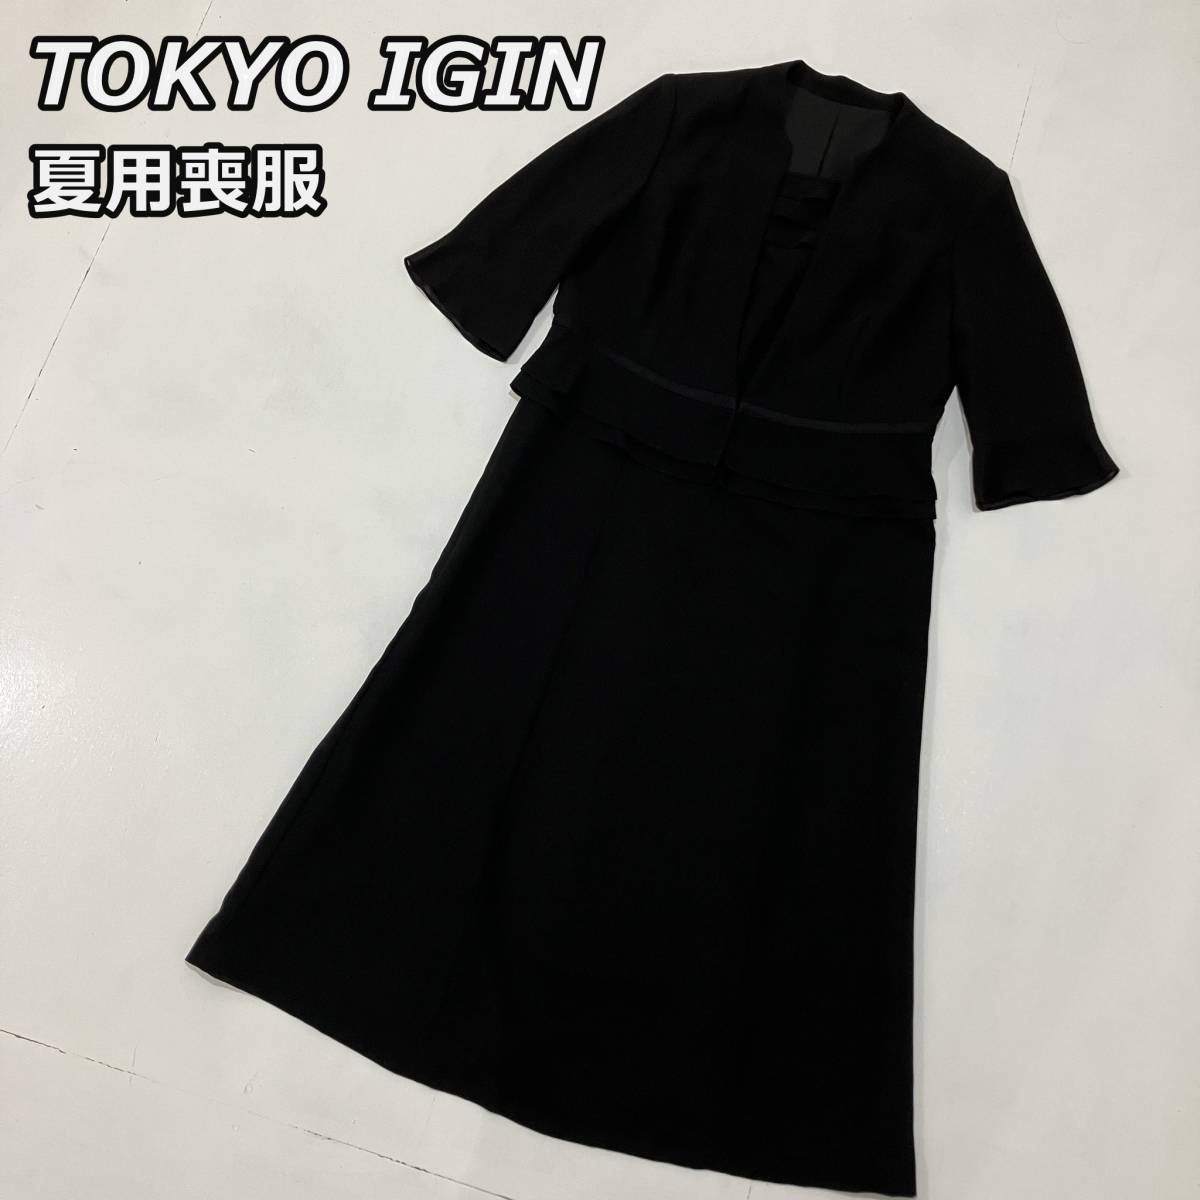 【TOKYO IGIN】東京イギン 夏用喪服 ジャケット一体型 ワンピース フレア袖 ブラックフォーマル 黒 ブラック